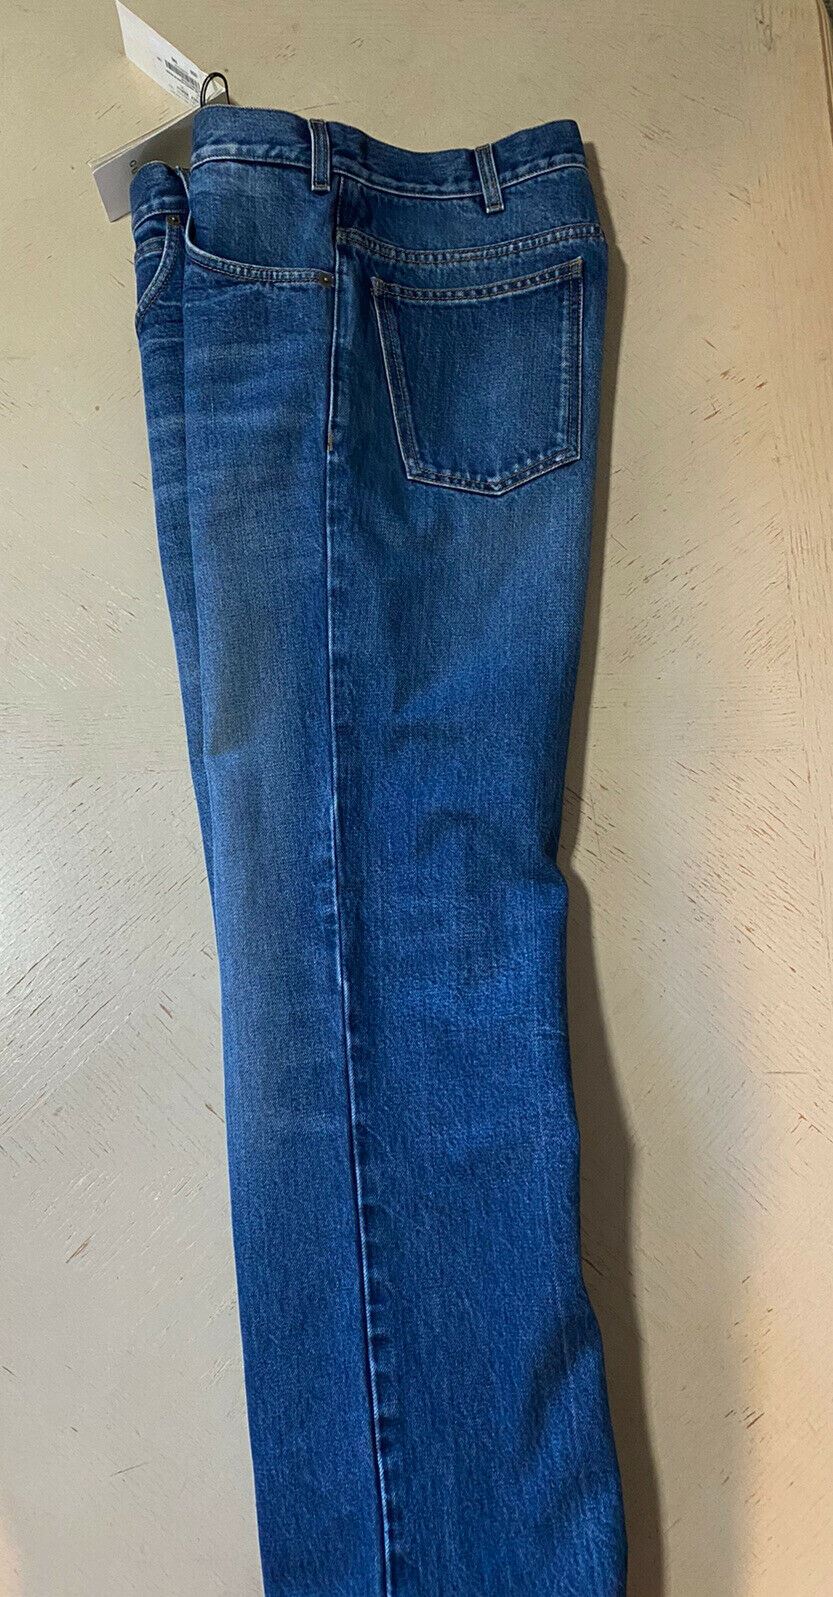 Мужские джинсы Gucci за 1200 долларов NWT 36 США Италия